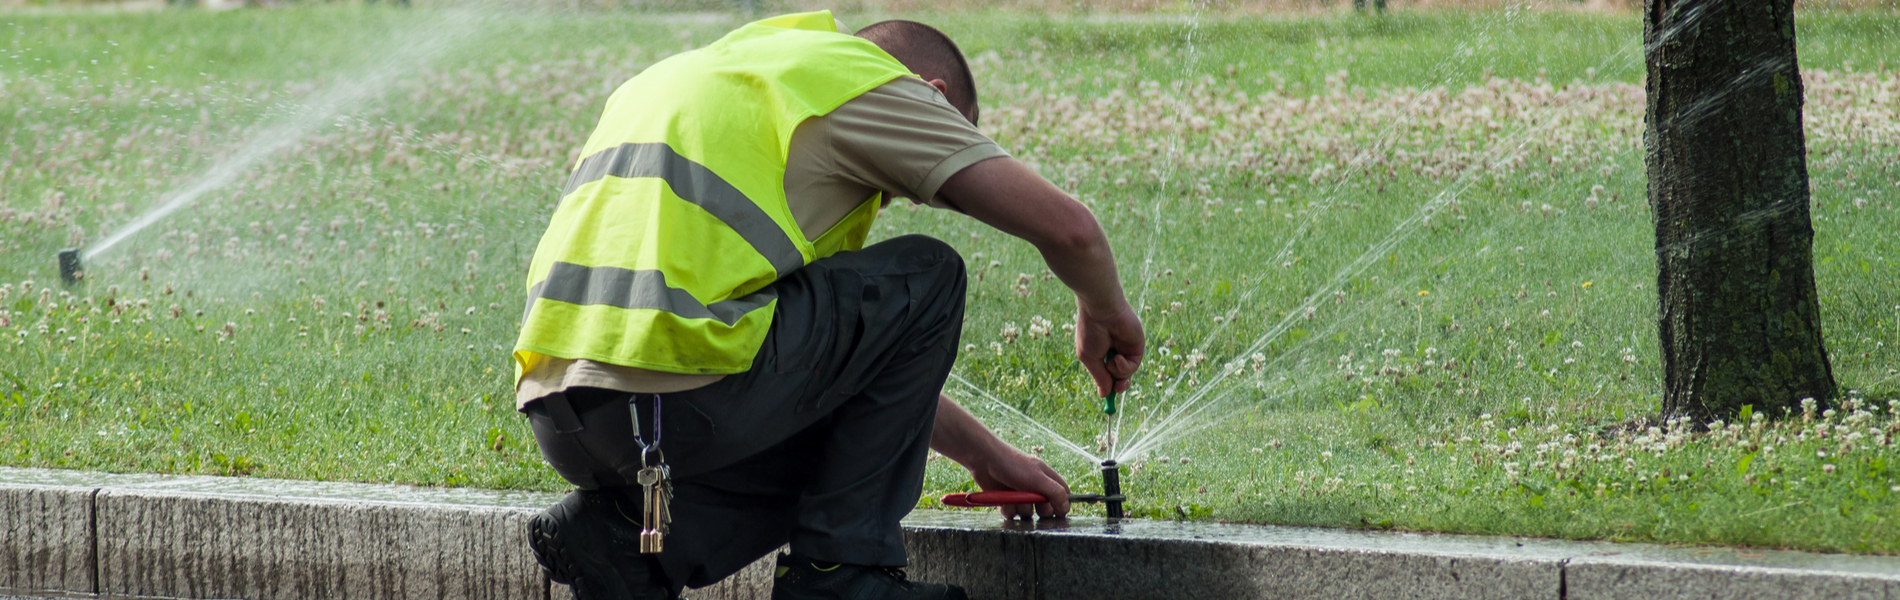 Olivette, MO irrigation repair | professional Olivette, MO irrigation repair services | Lawn Sprinklers St. Louis